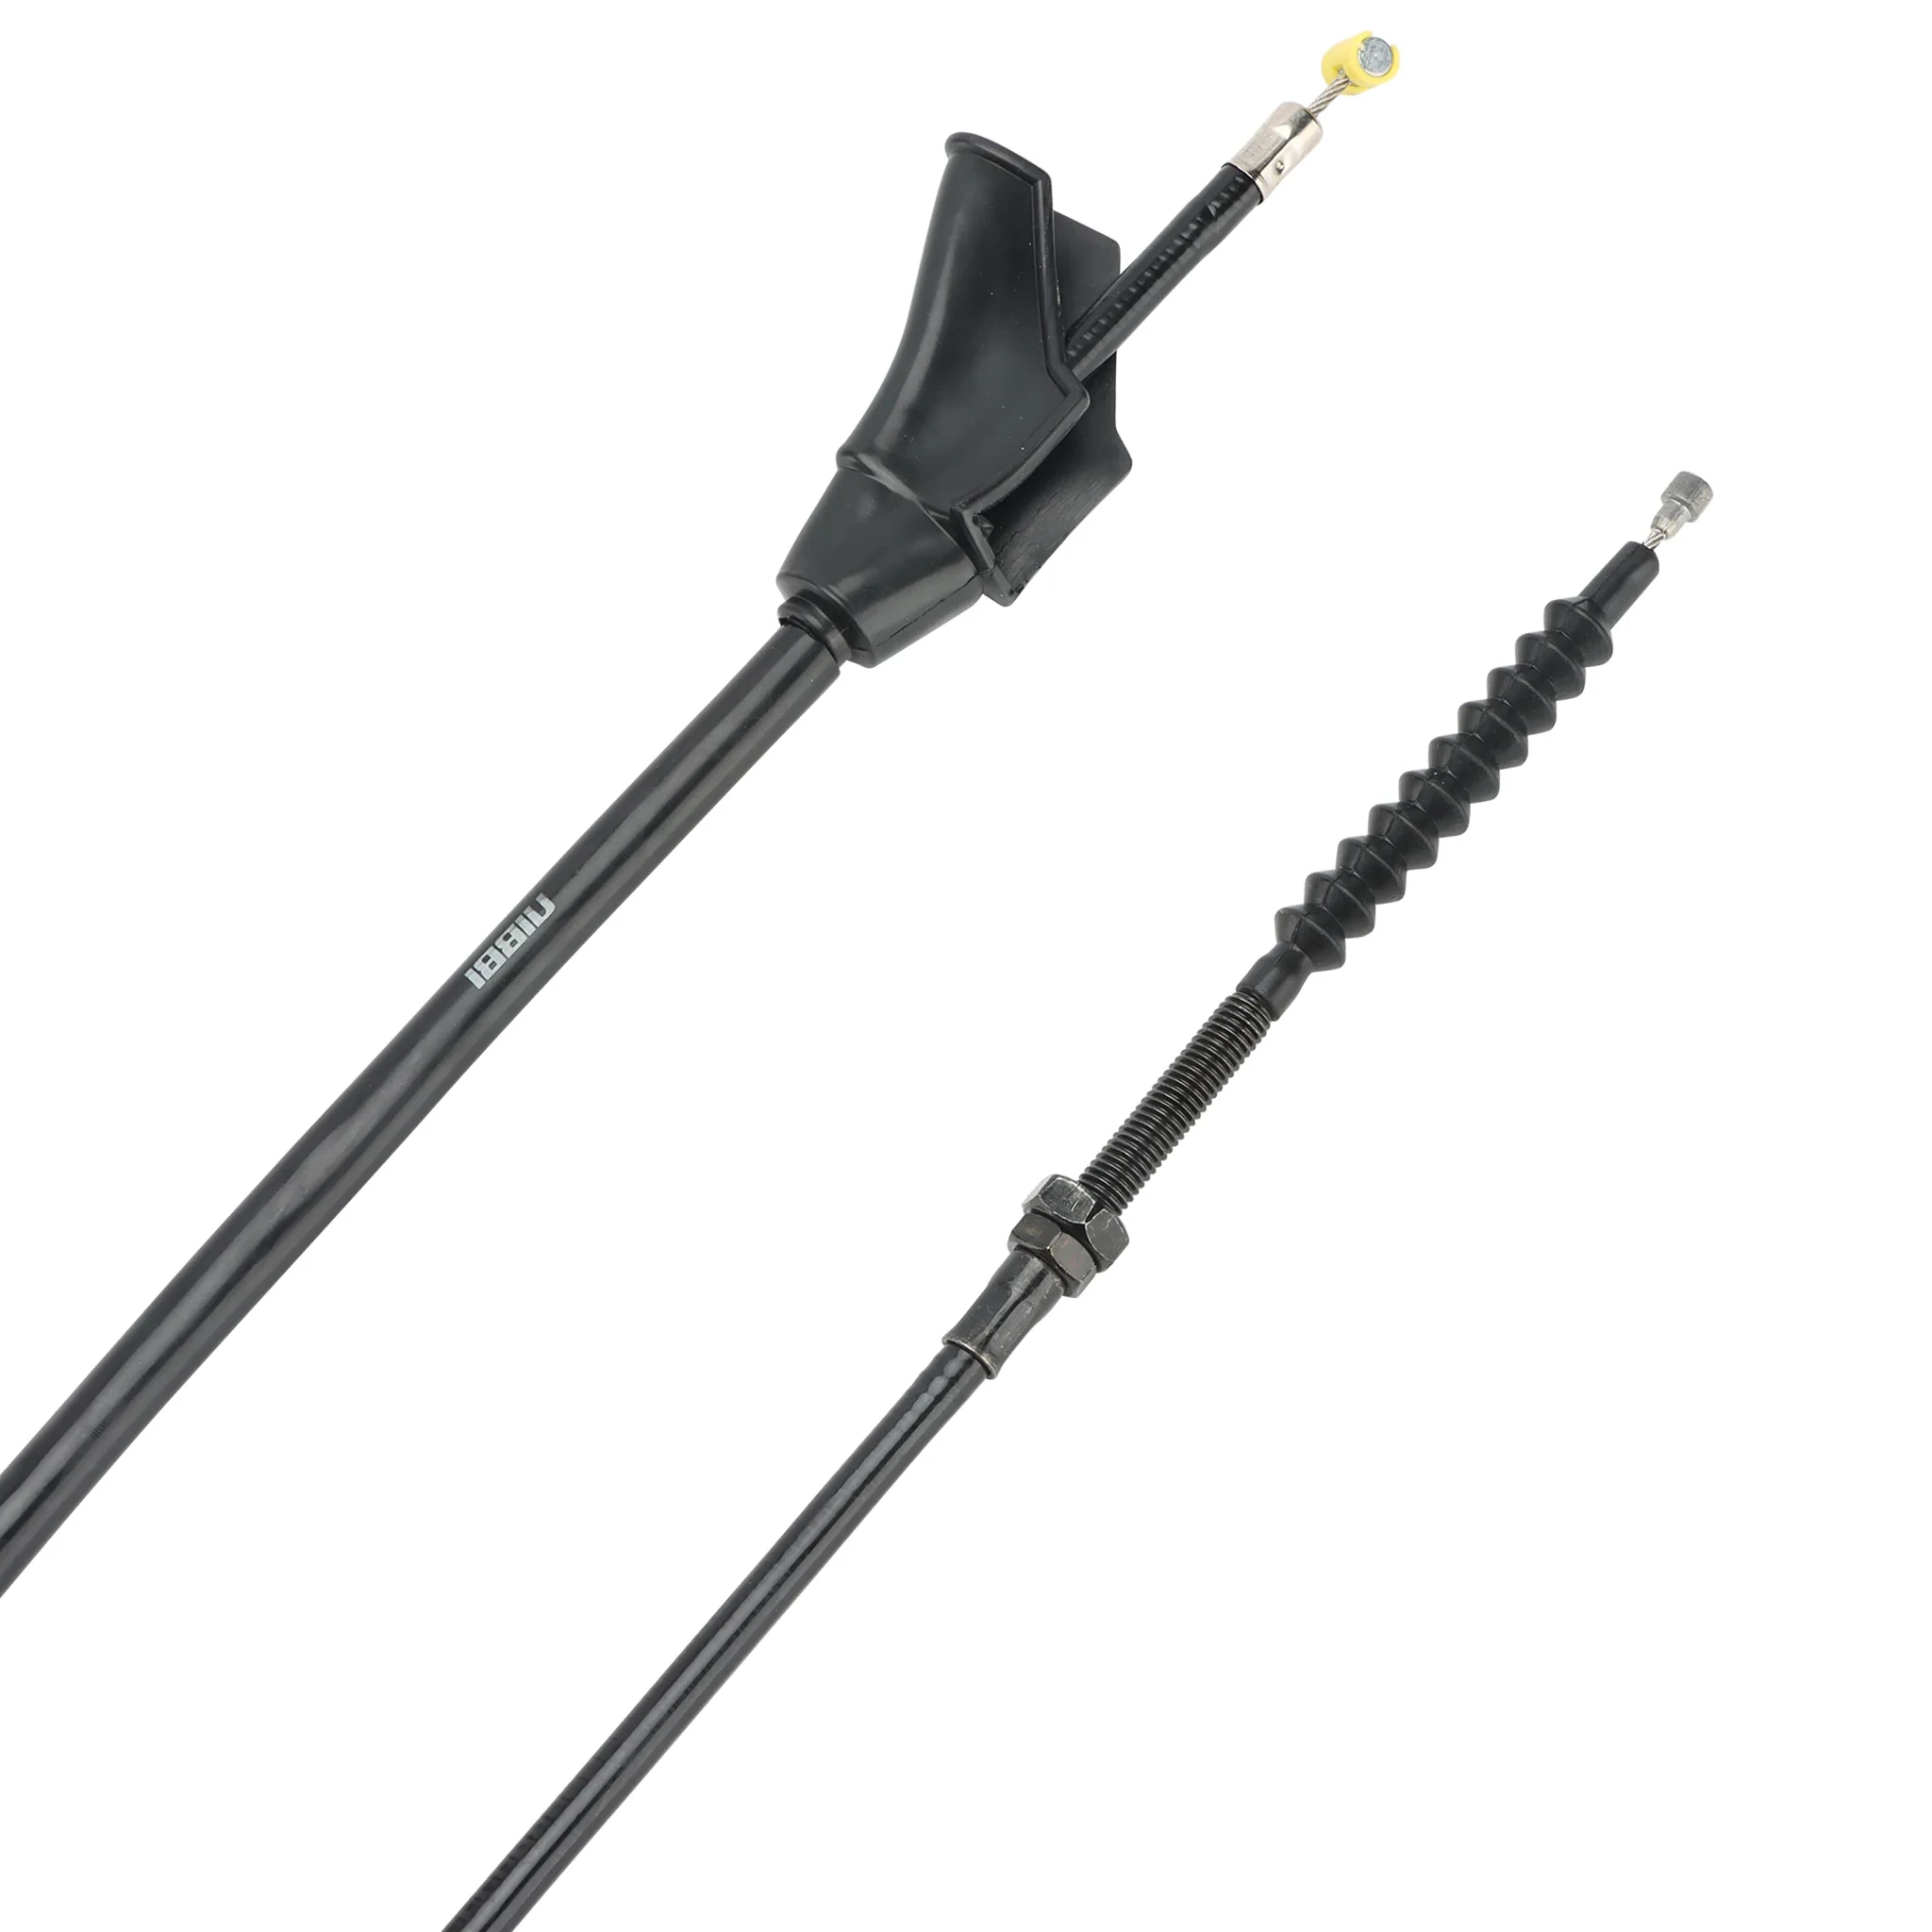 CB Clutch Cable-Black 38.8"/4.8"